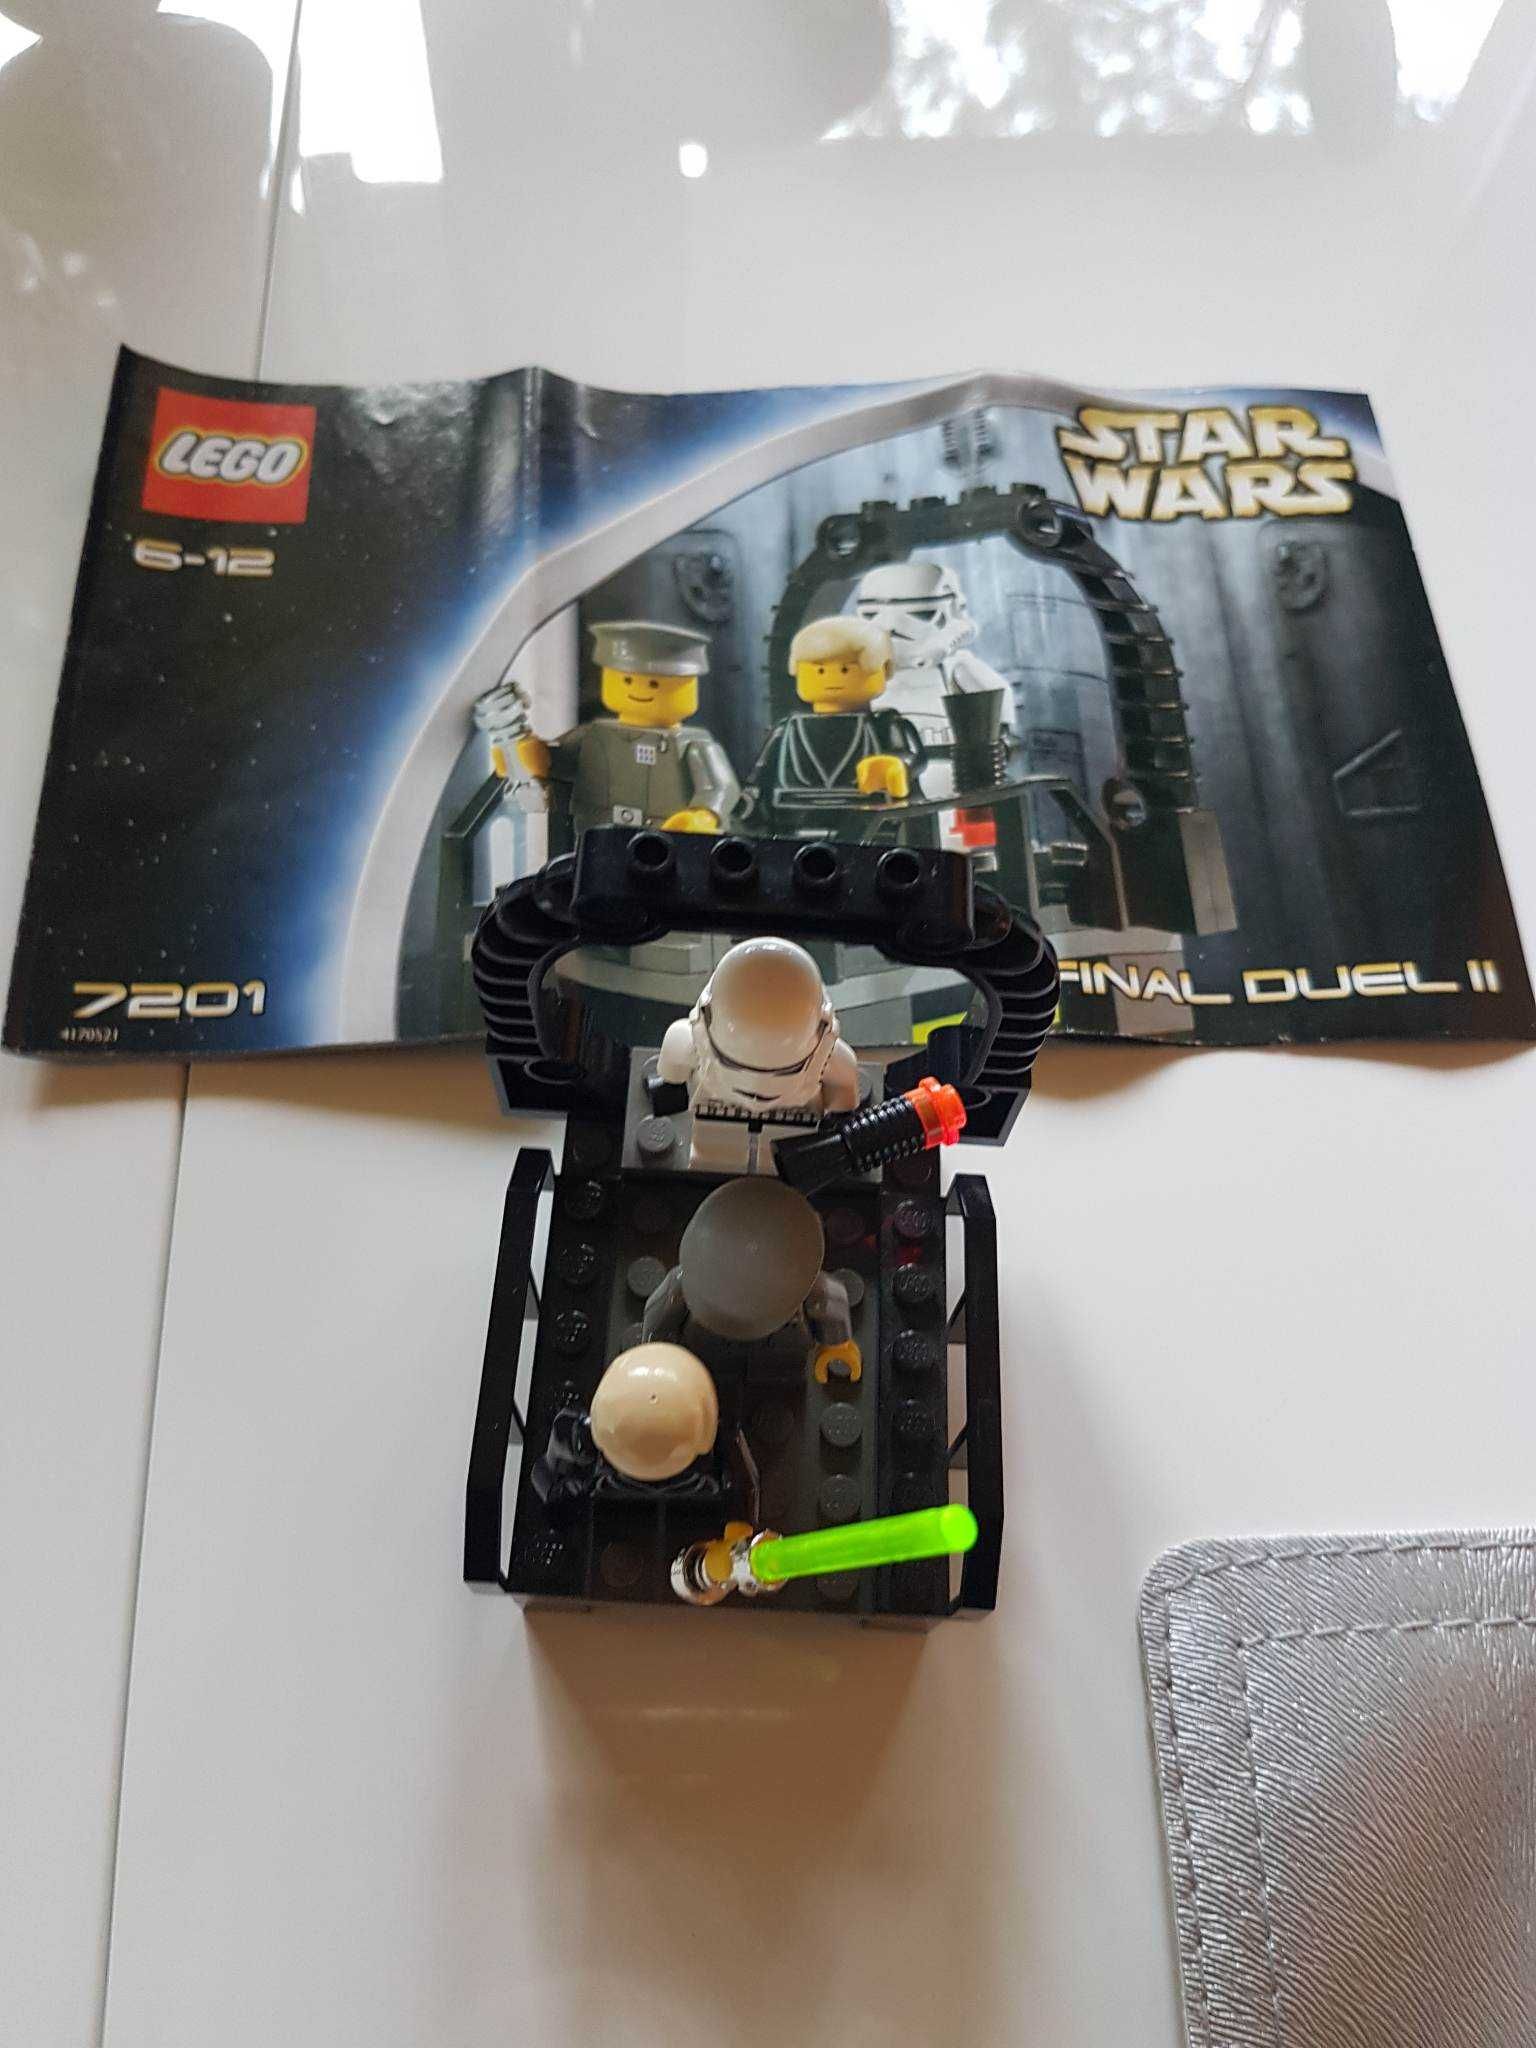 LEGO 7201 Star Wars  Final Duel 2 ,unikat 2002